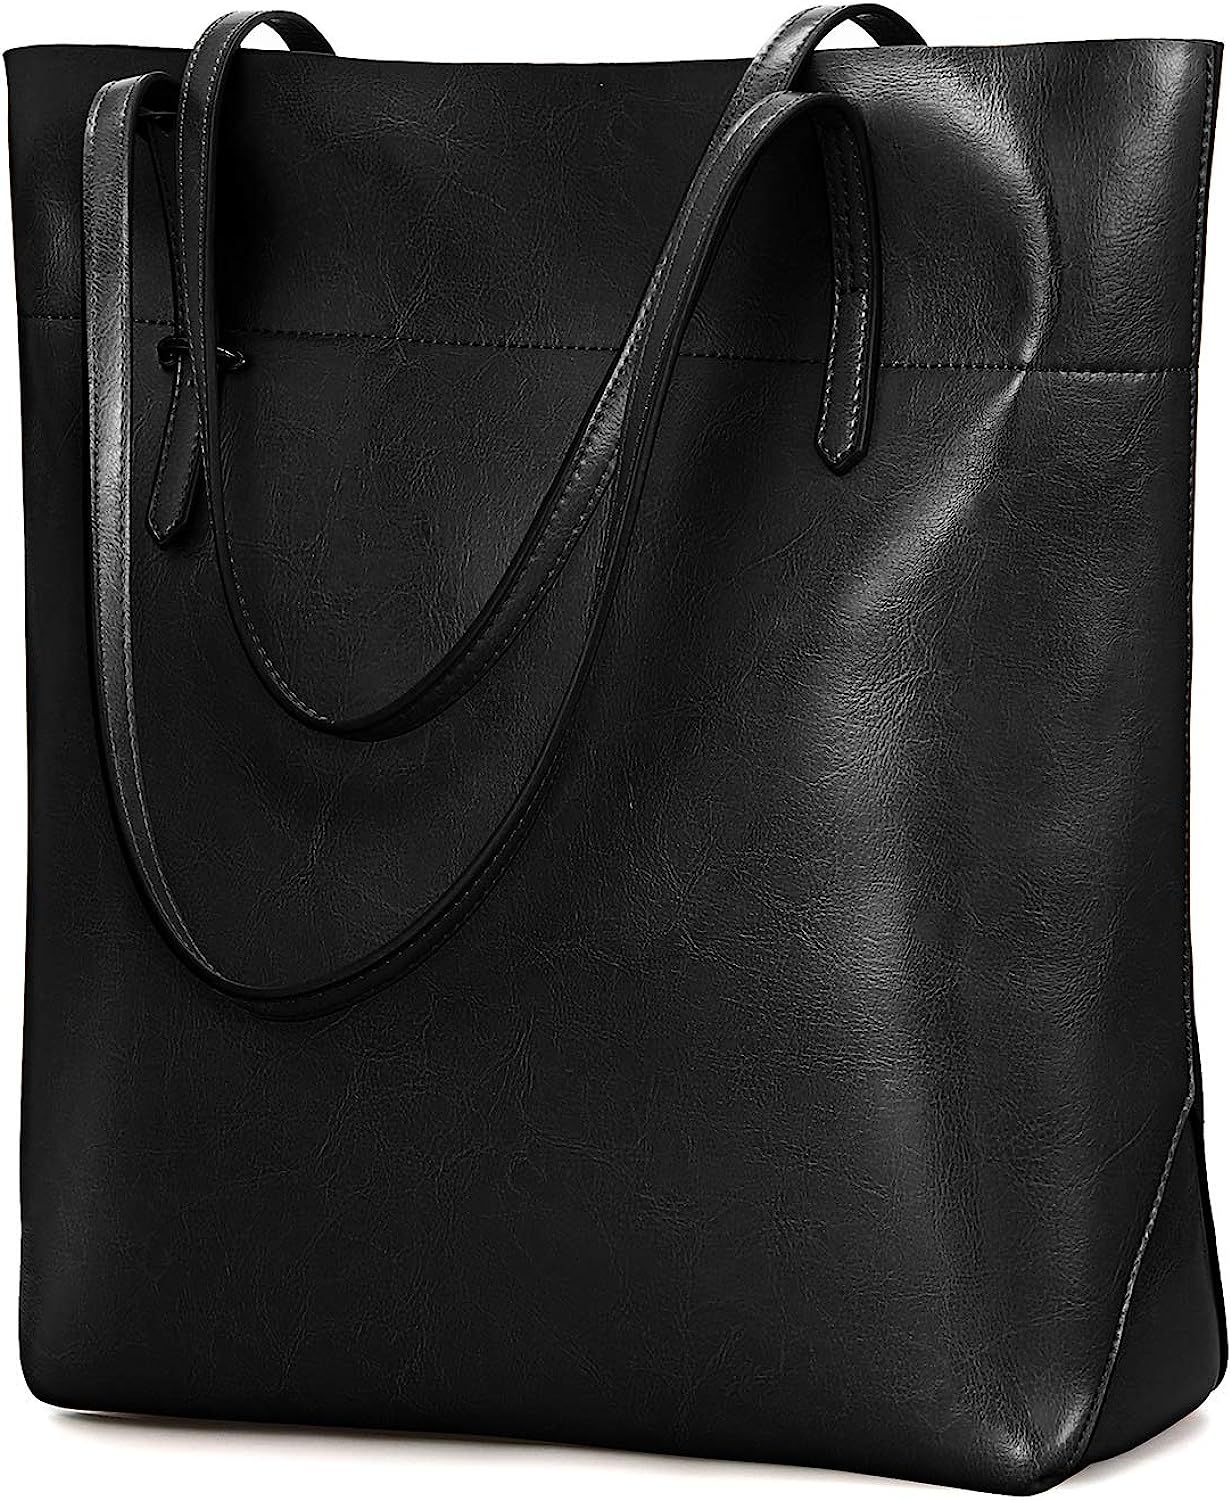 Kattee Vintage Genuine Leather Tote Shoulder Bag With Adjustable Handles | Amazon (US)